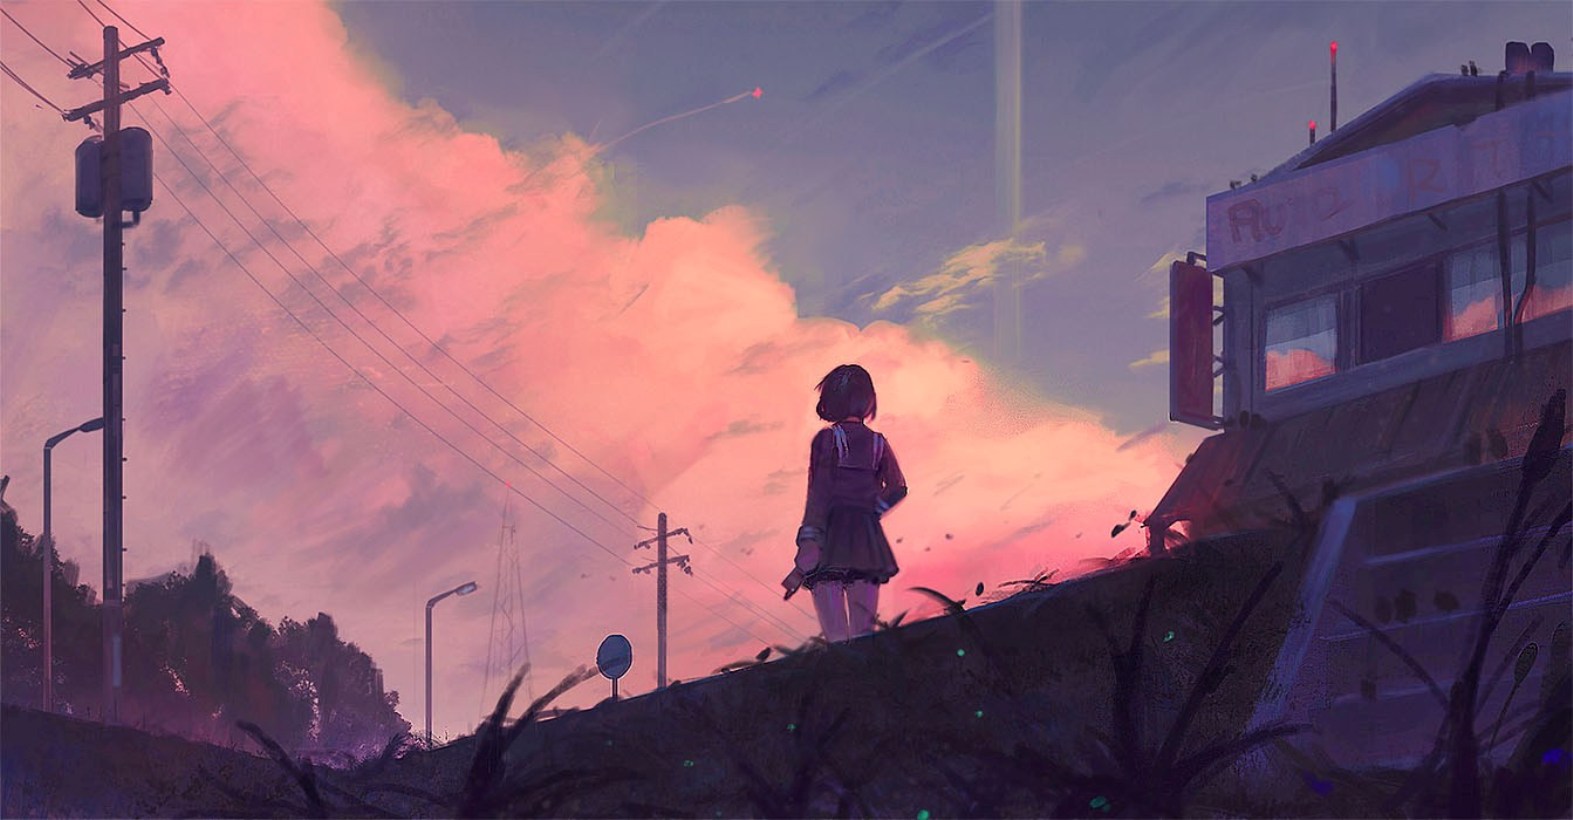 Anime Girls Sunset Sky Artwork Painting Digital Art Moescape 1573x820